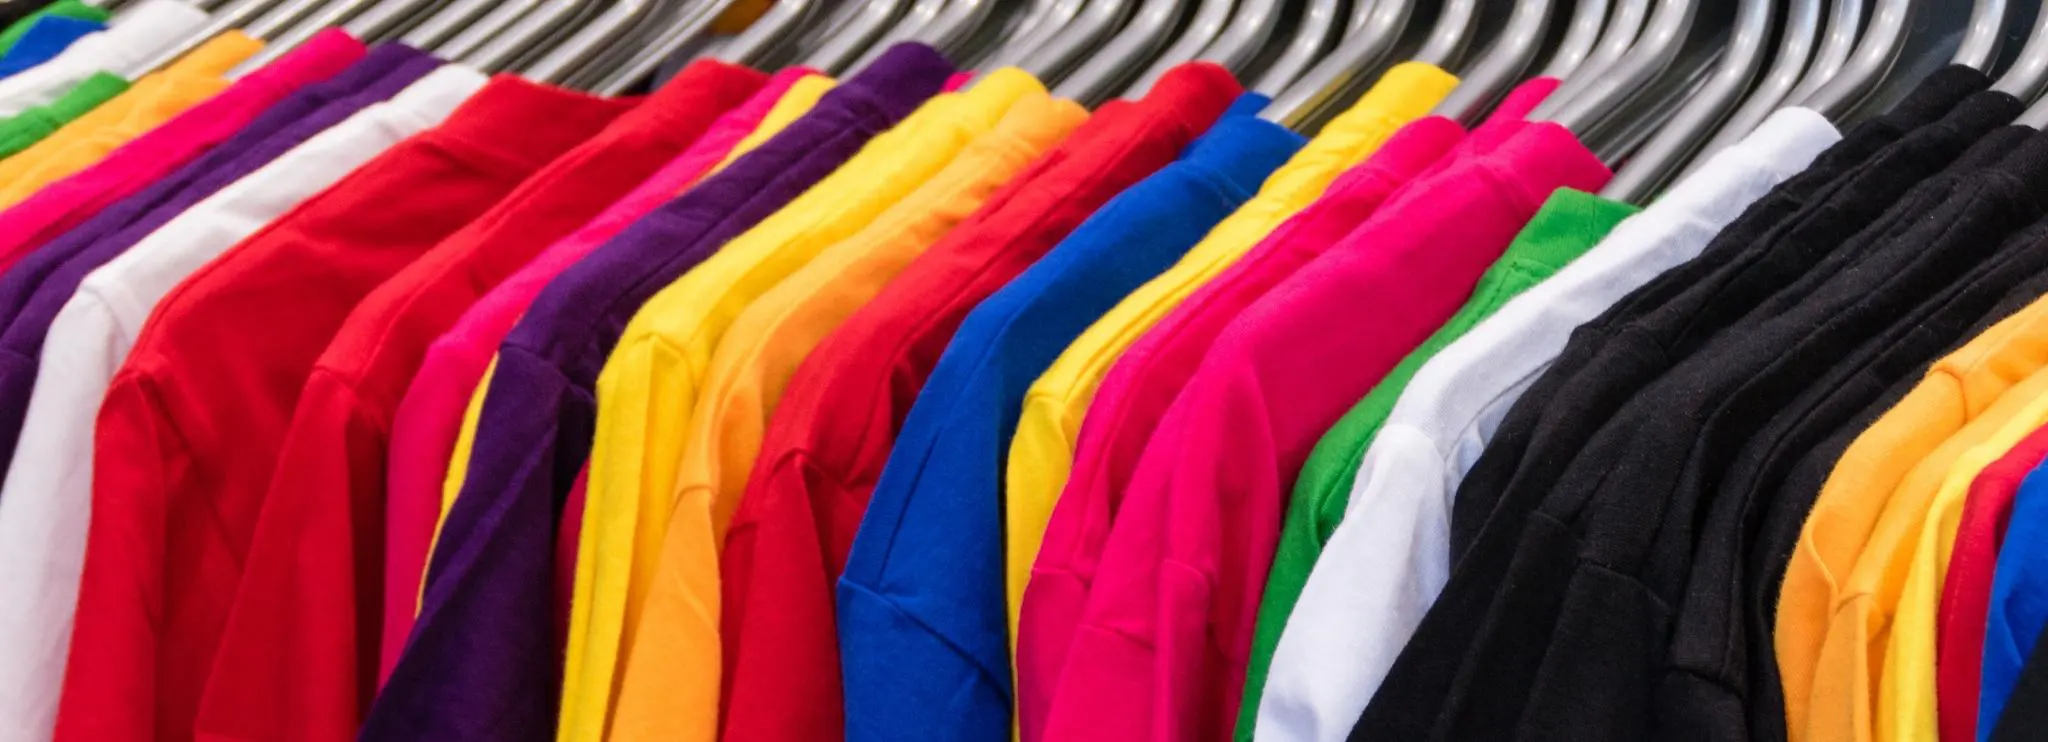 Best Branded Men's Plain T Shirts Price in Pakistan - Kayazar